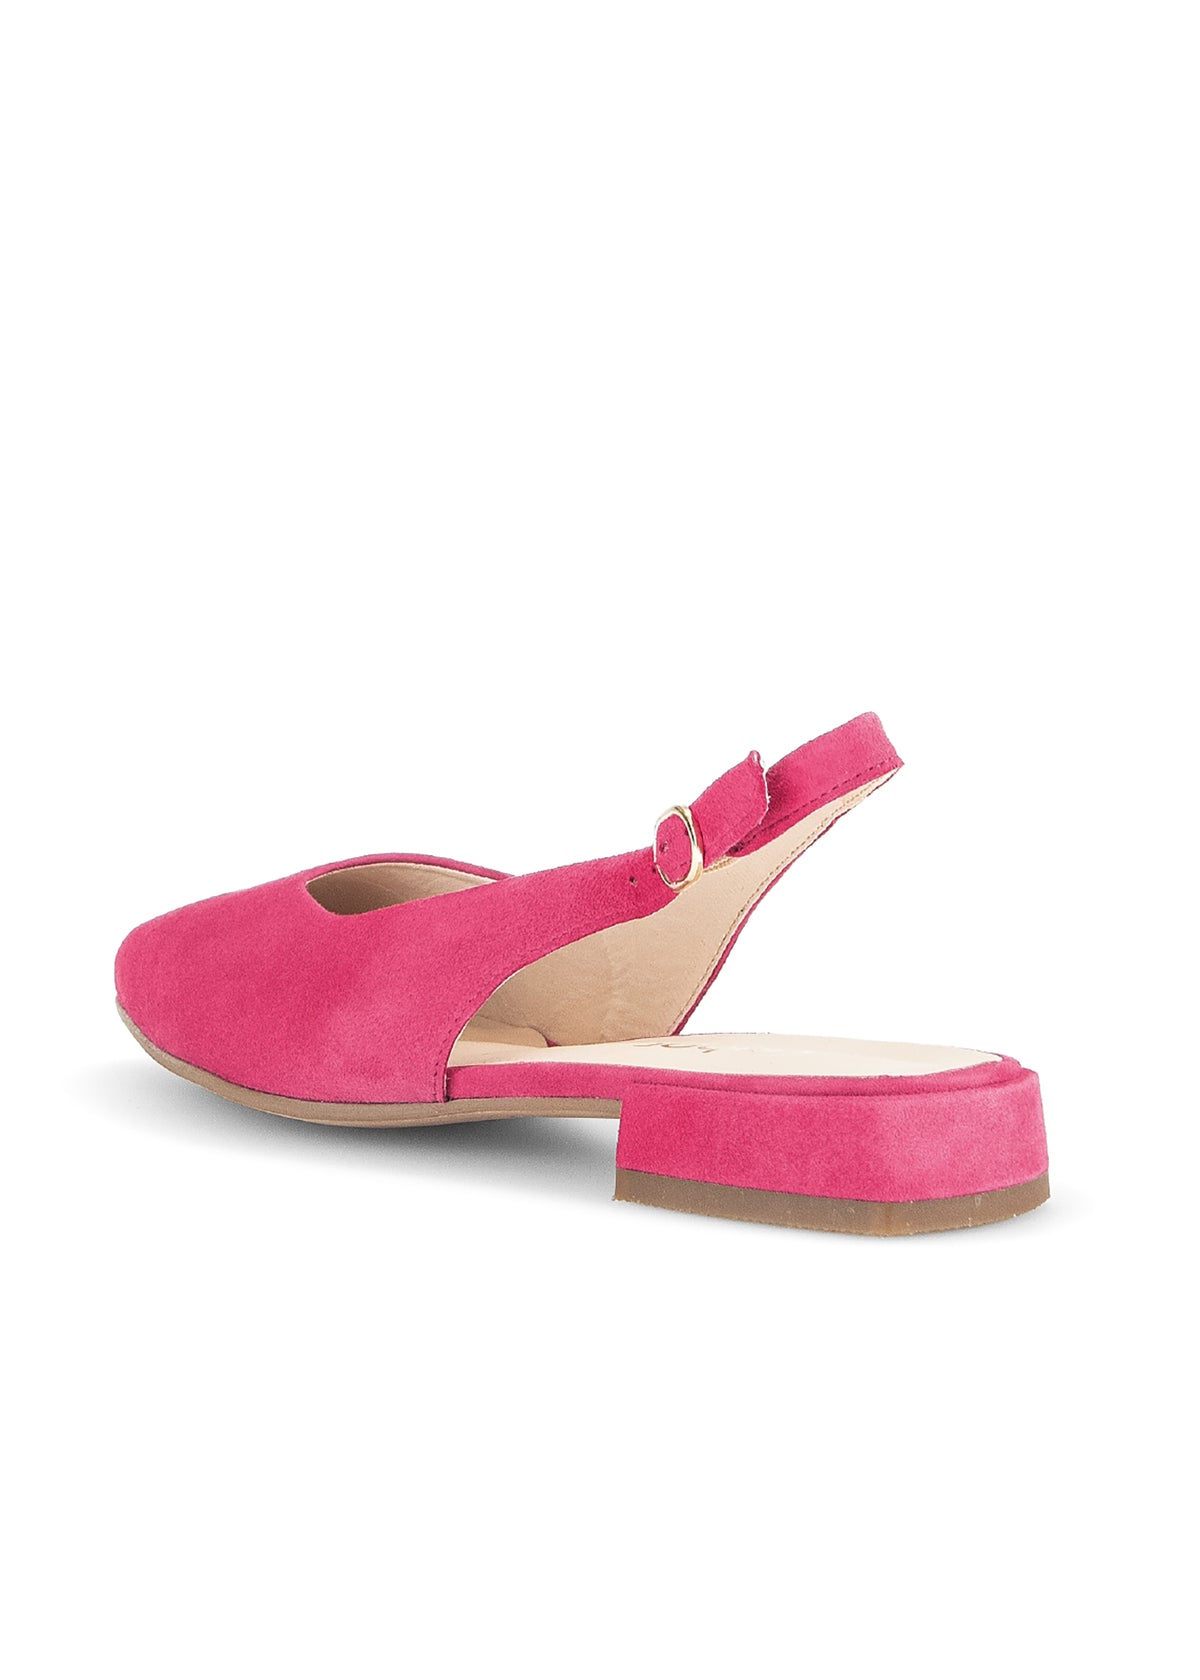 Slingback loafers - pink nubuck leather